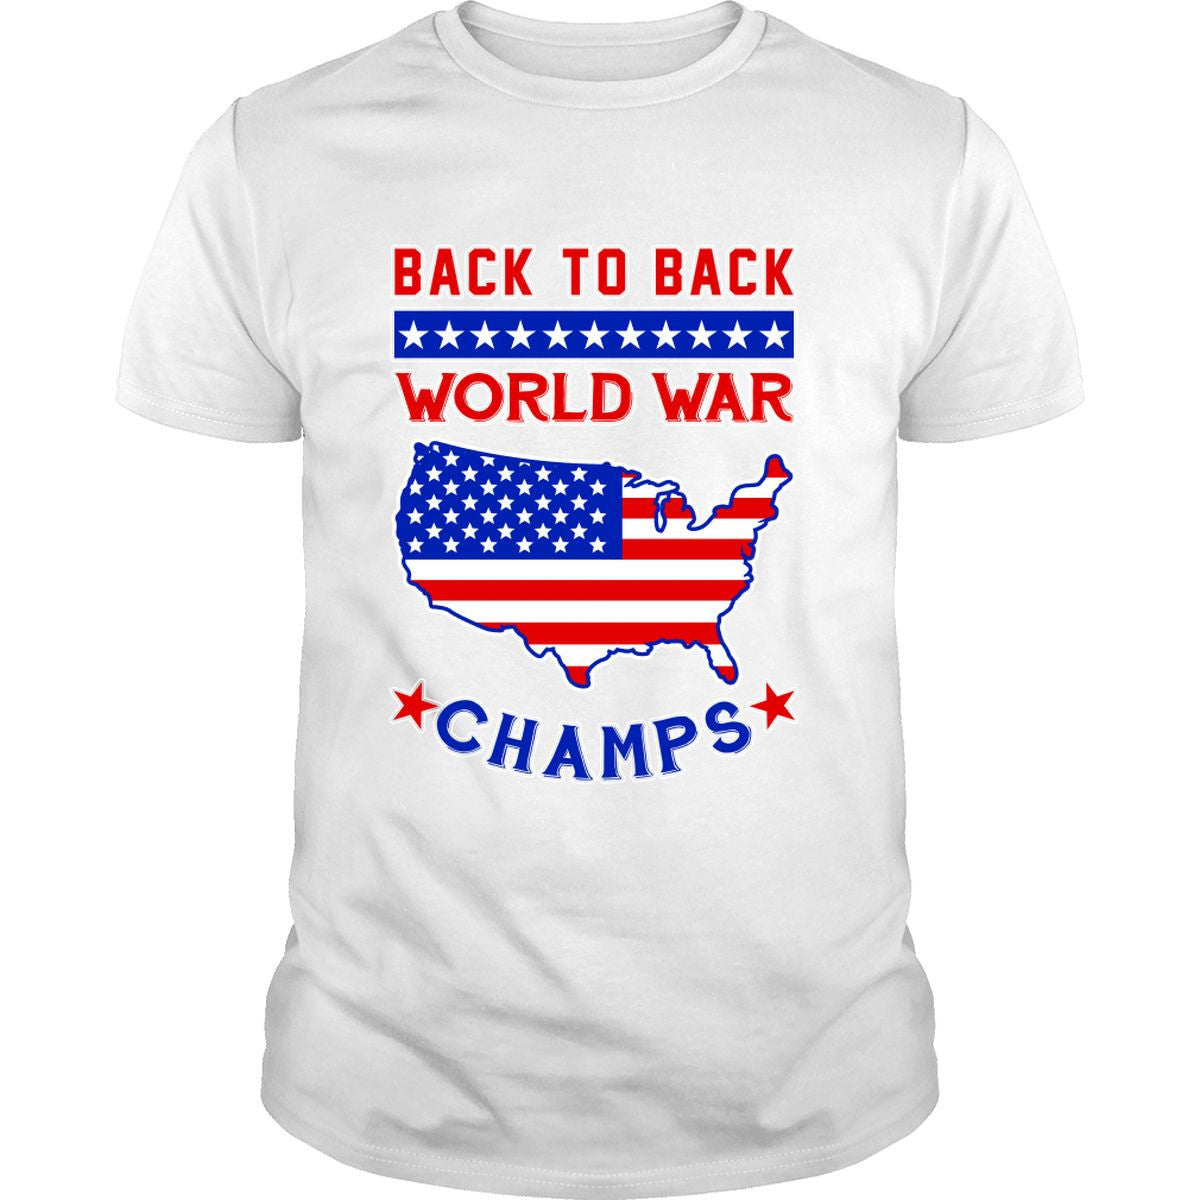 Back To Back World War Champs Shirt (White)